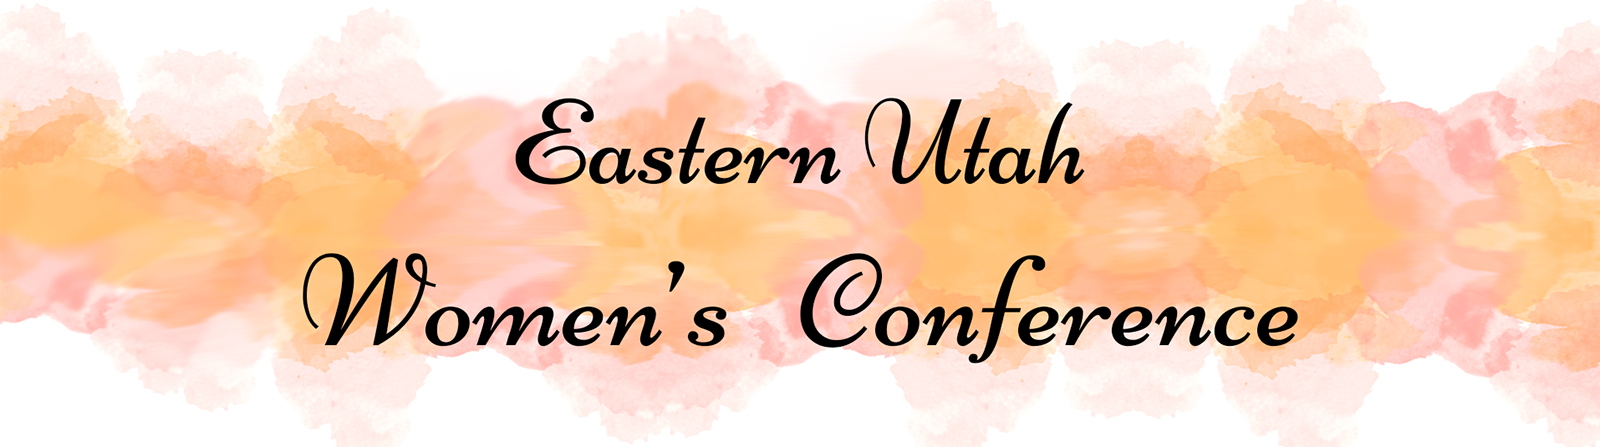 Eastern Utah Women's Conference